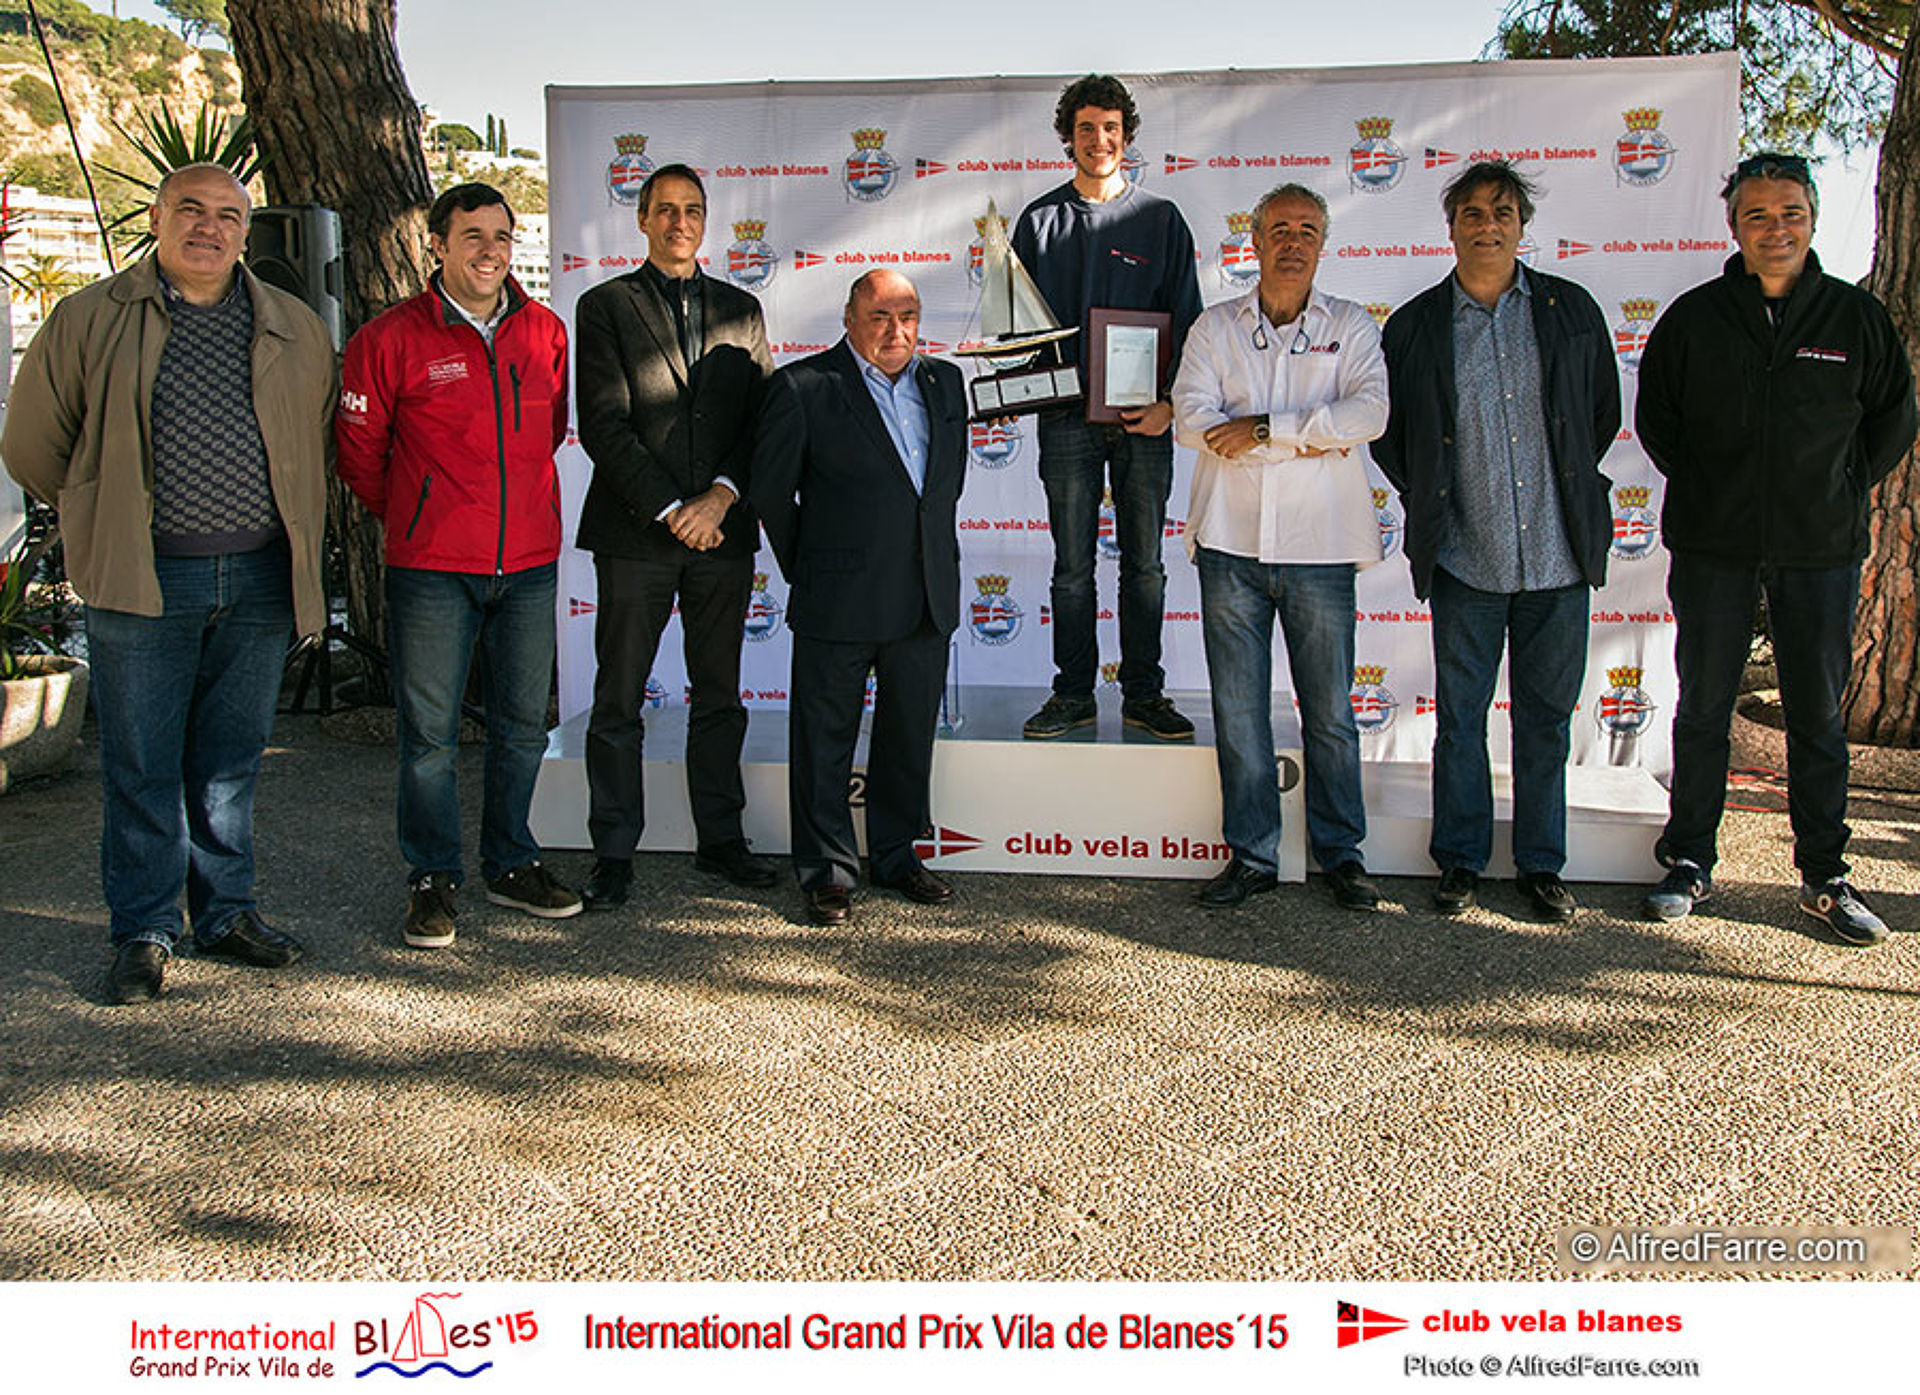 Aleix Subirà, winner of the International Grand Prix Vila Blanes 2015